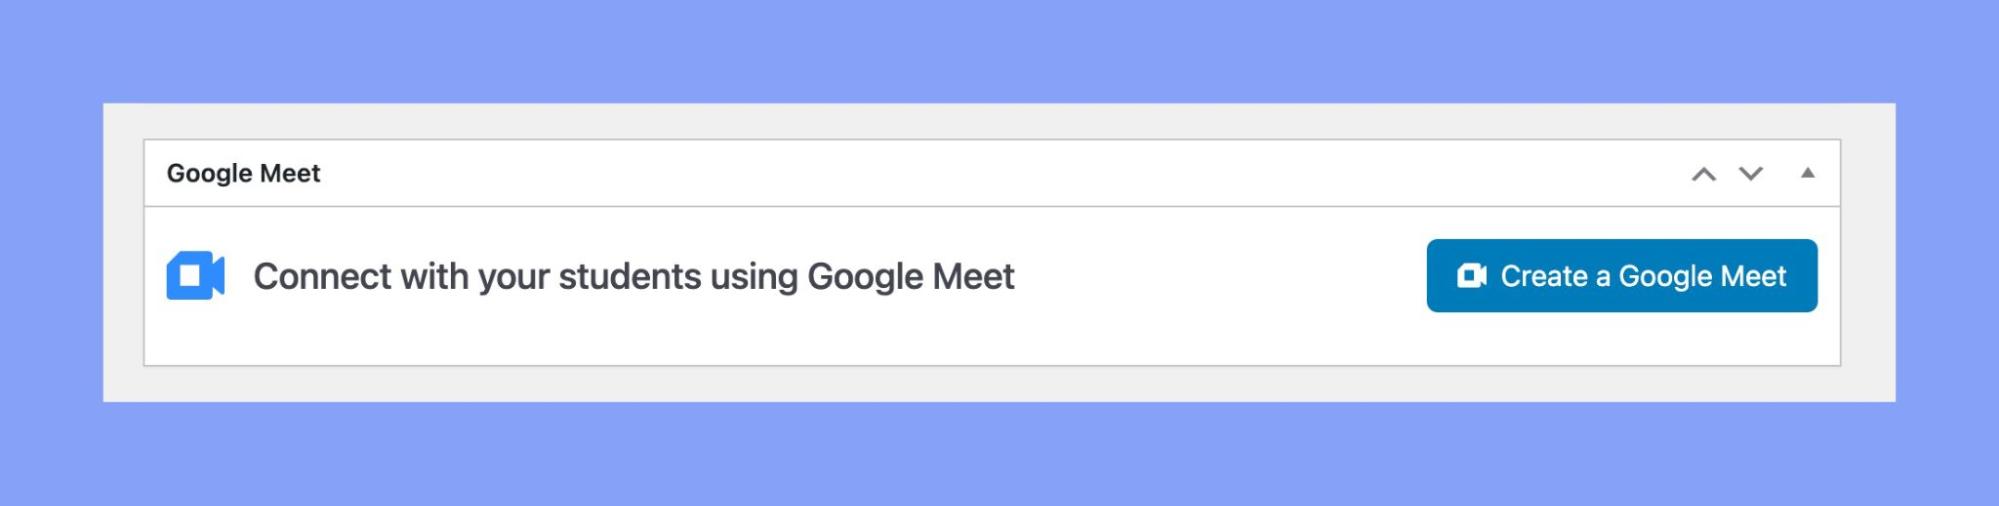 Google Meet Meeting-Course Specific